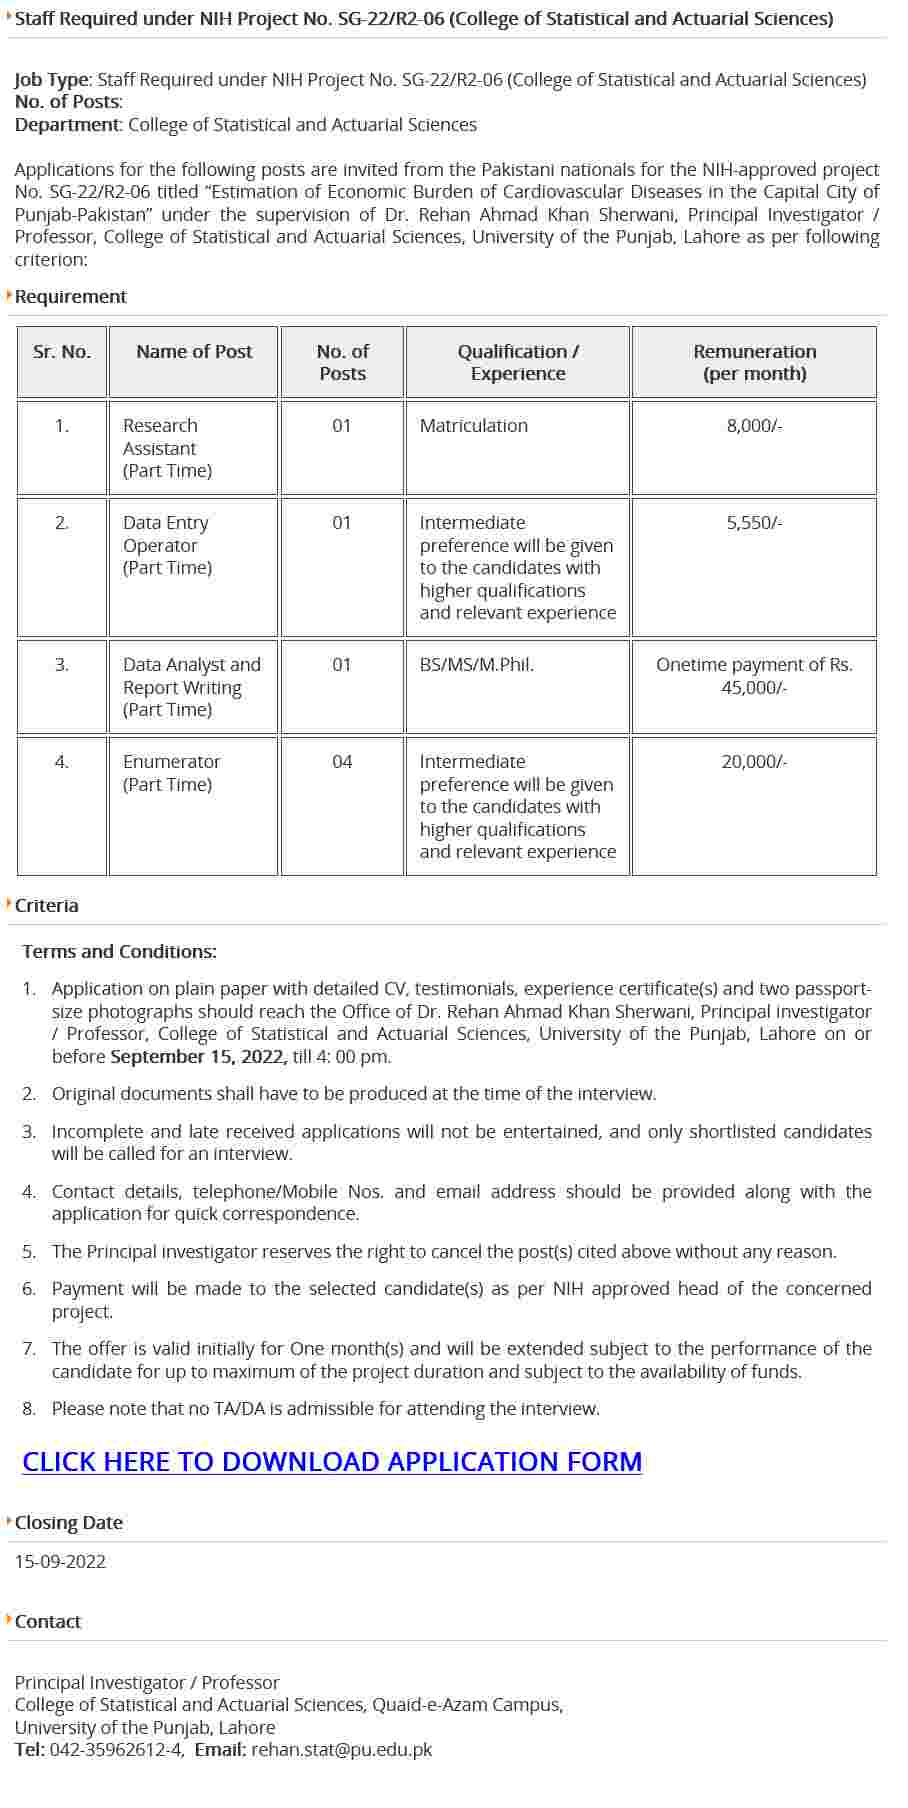 University of Punjab Jobs Download Application